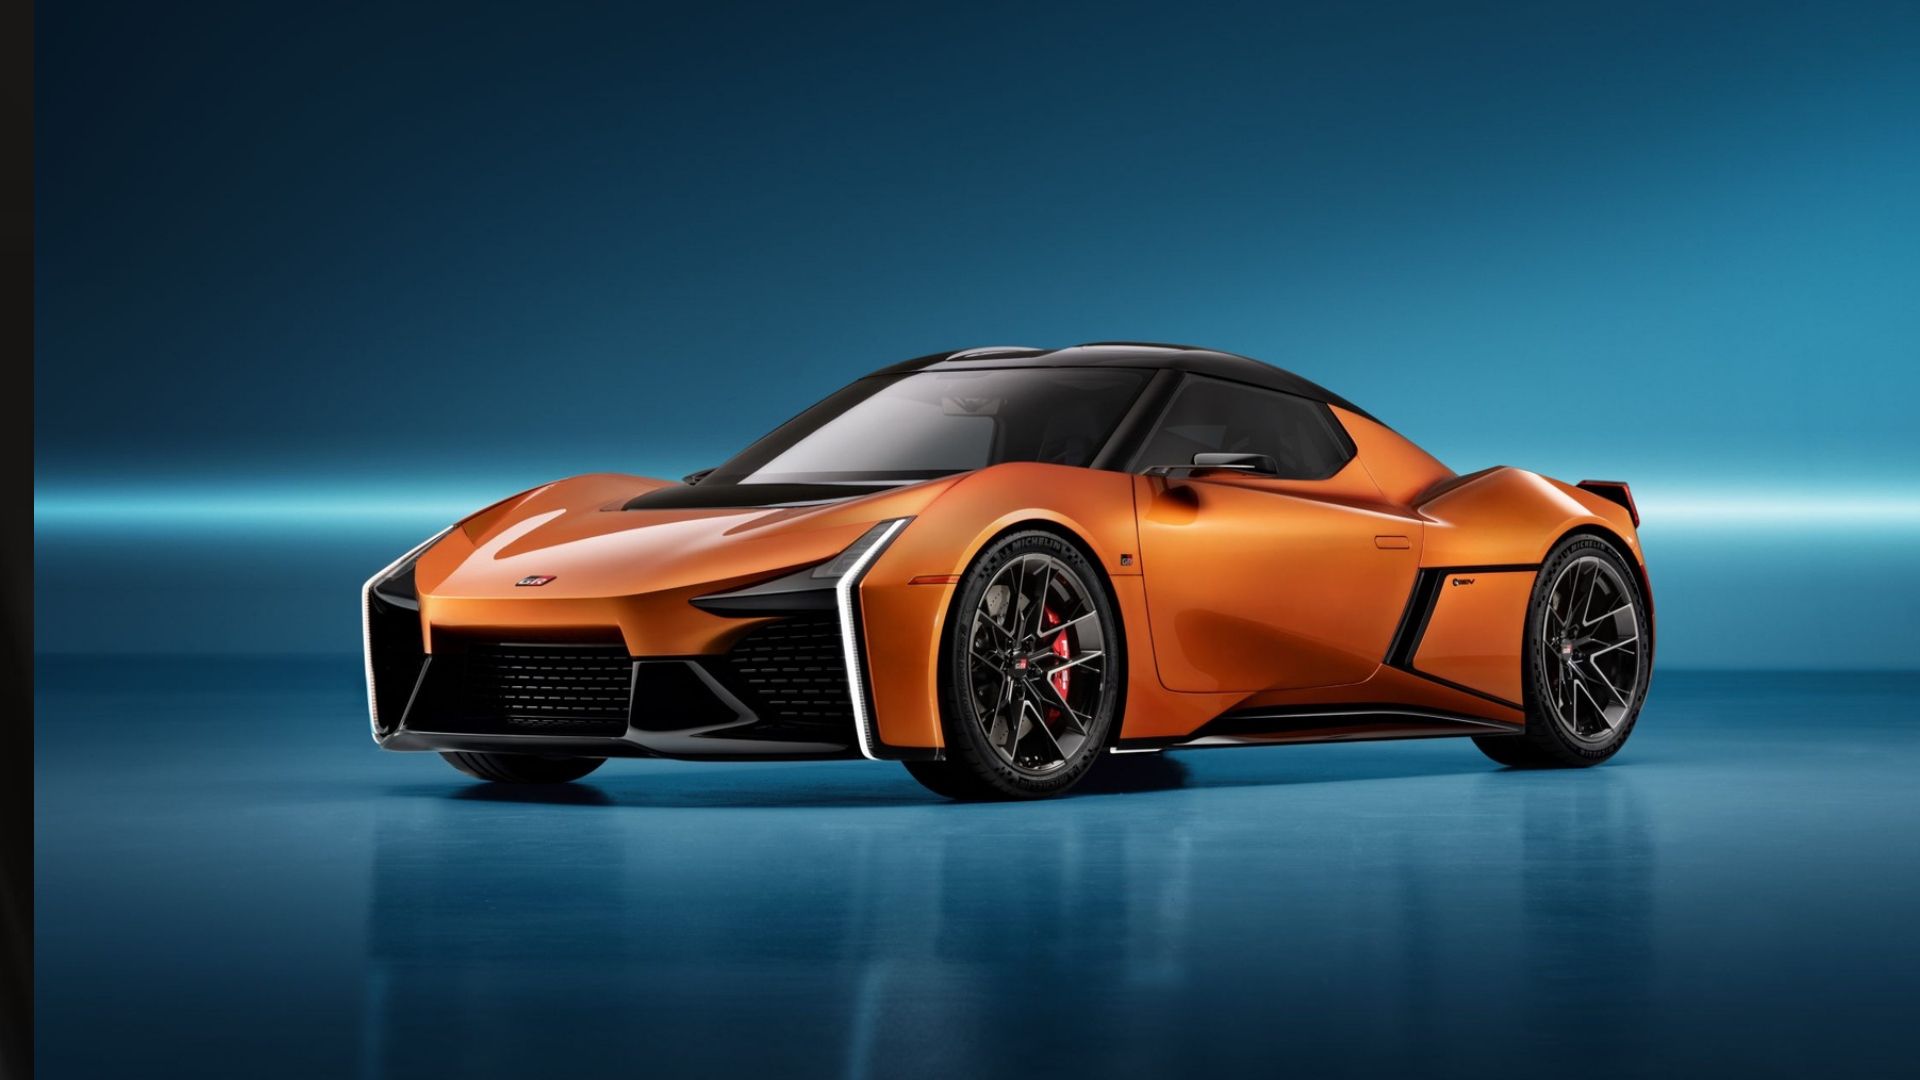 Toyota FT-Se all electric sports concept car in orange posing in studio 